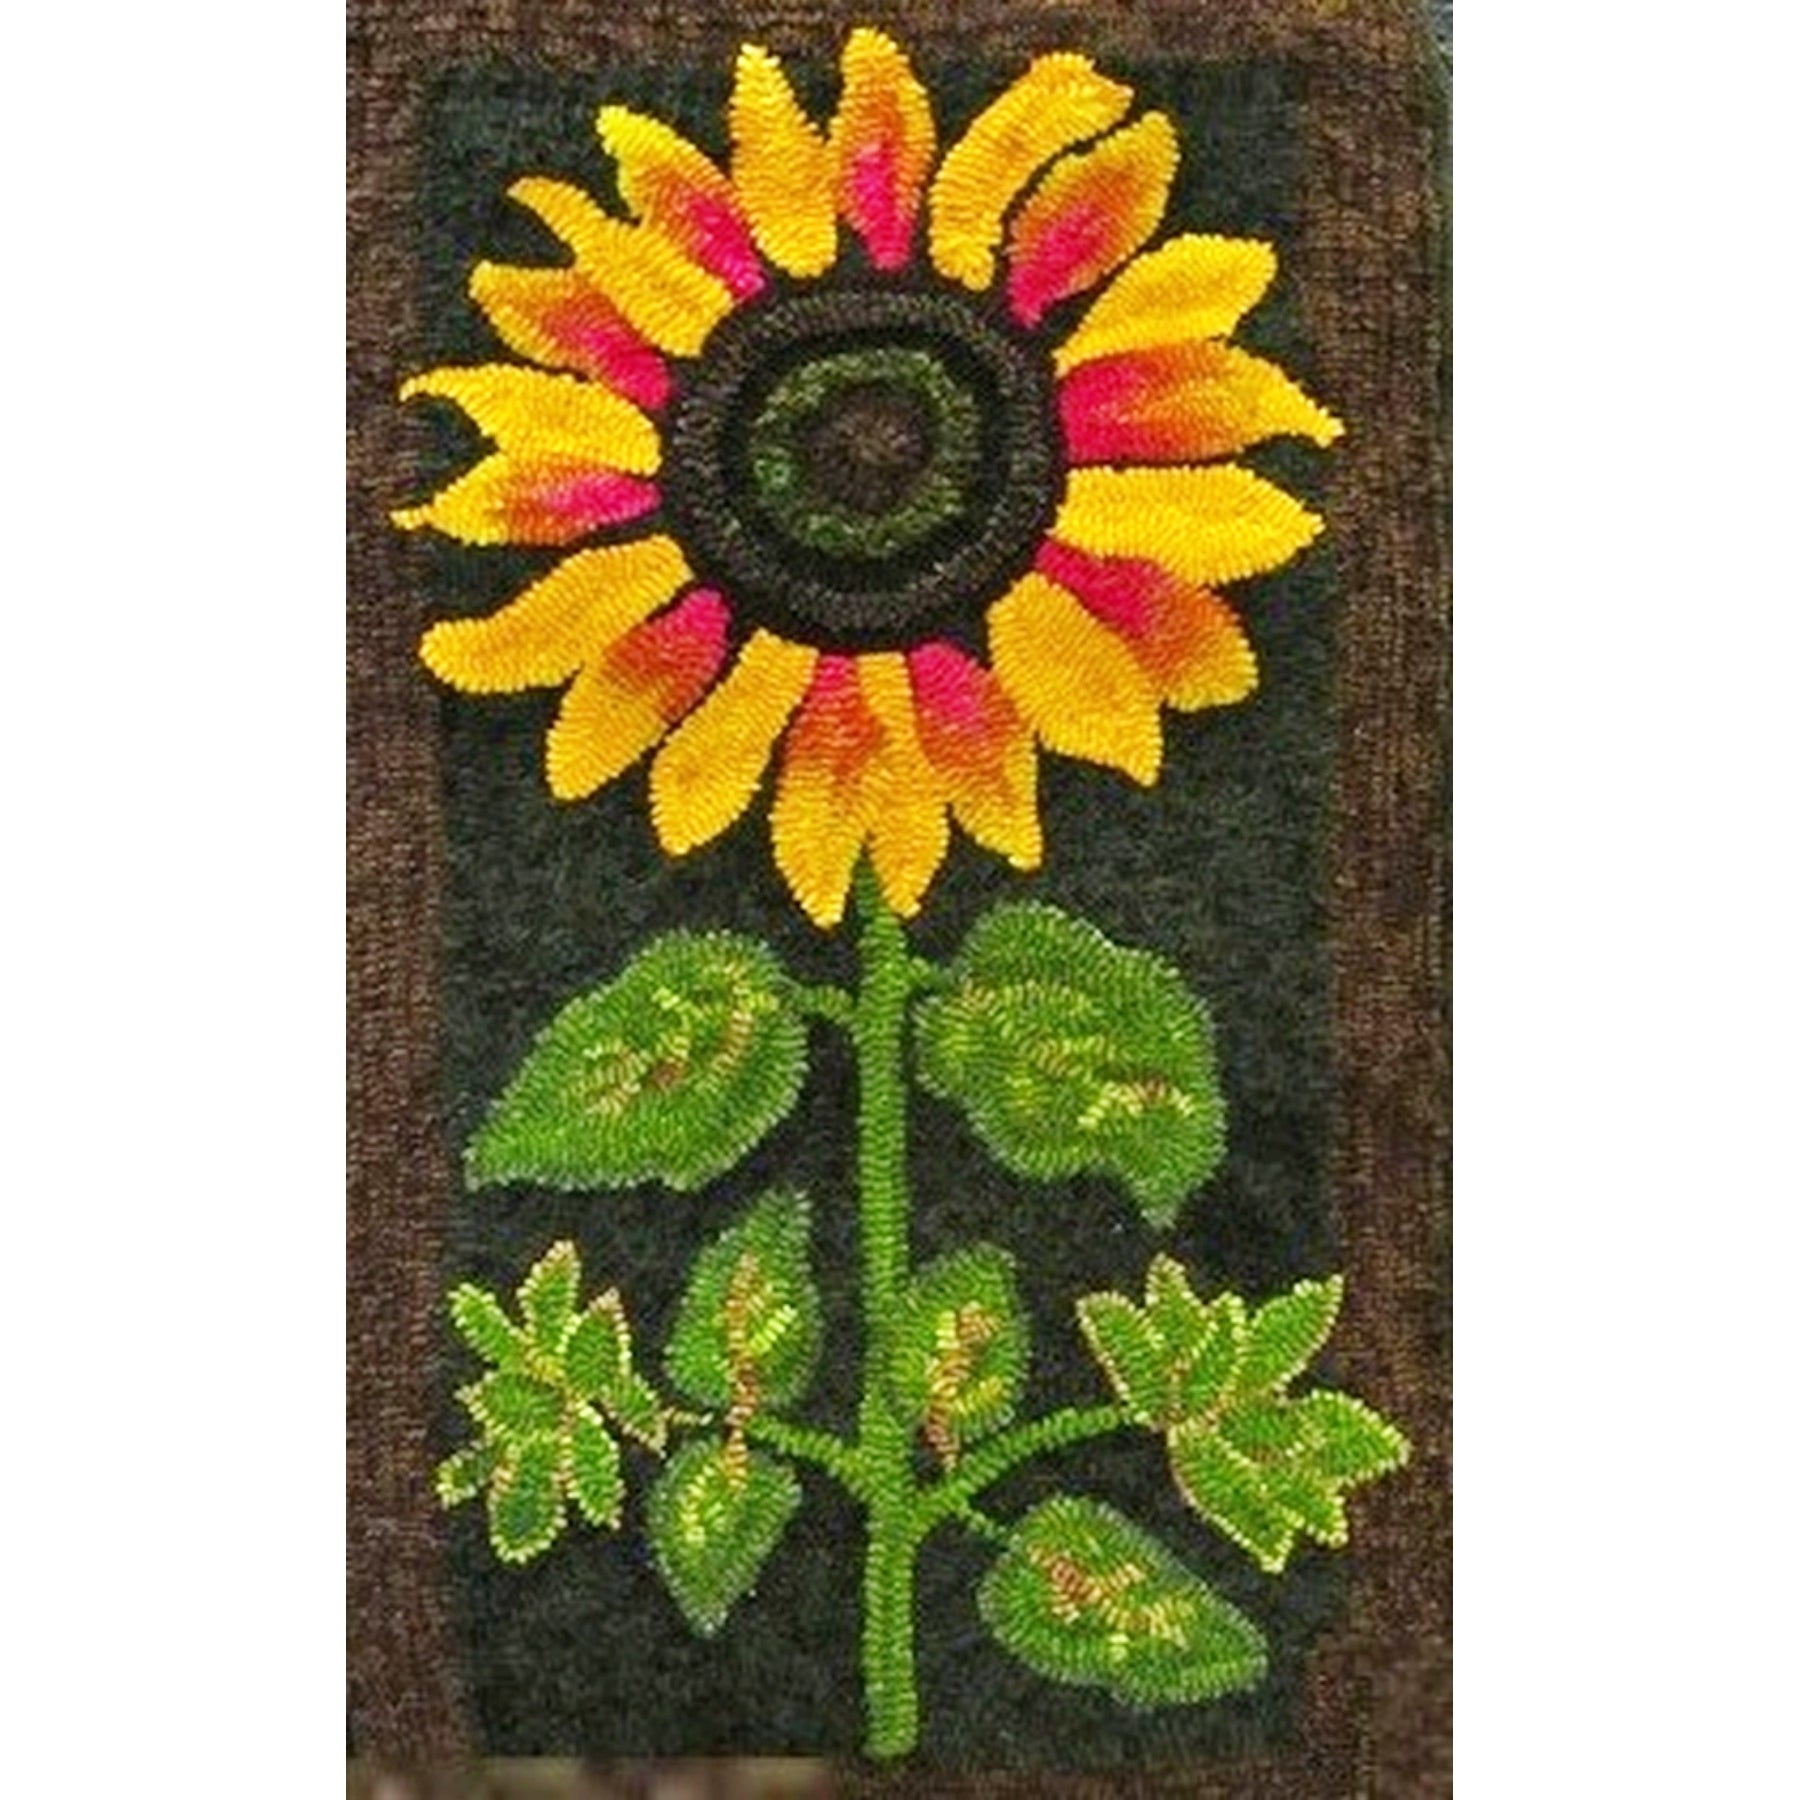 Sunflower, rug hooked by Susan Kleiden